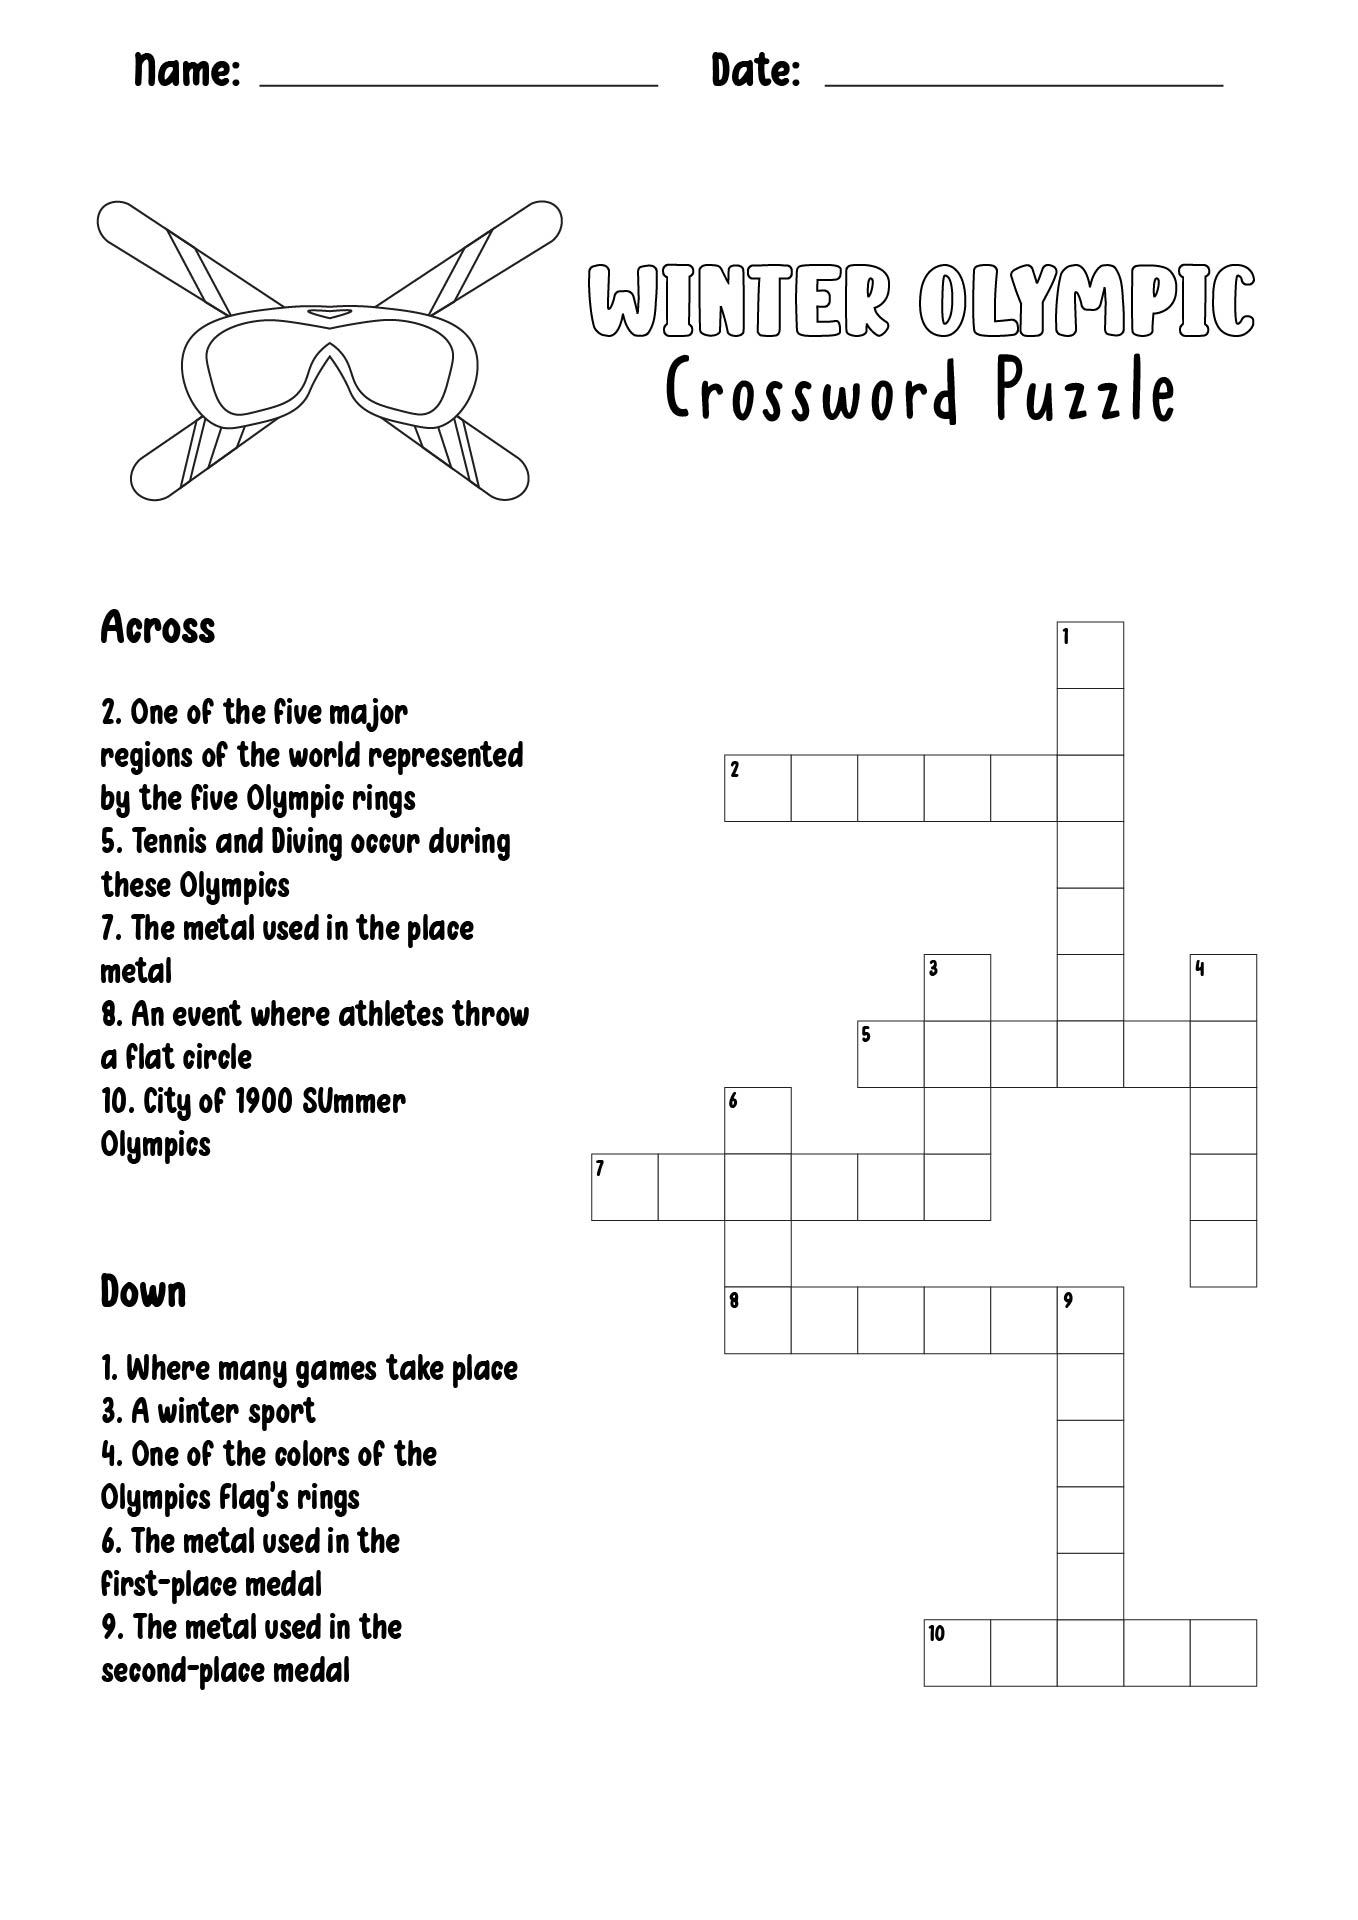 Winter Olympic Crossword Puzzle 186871 